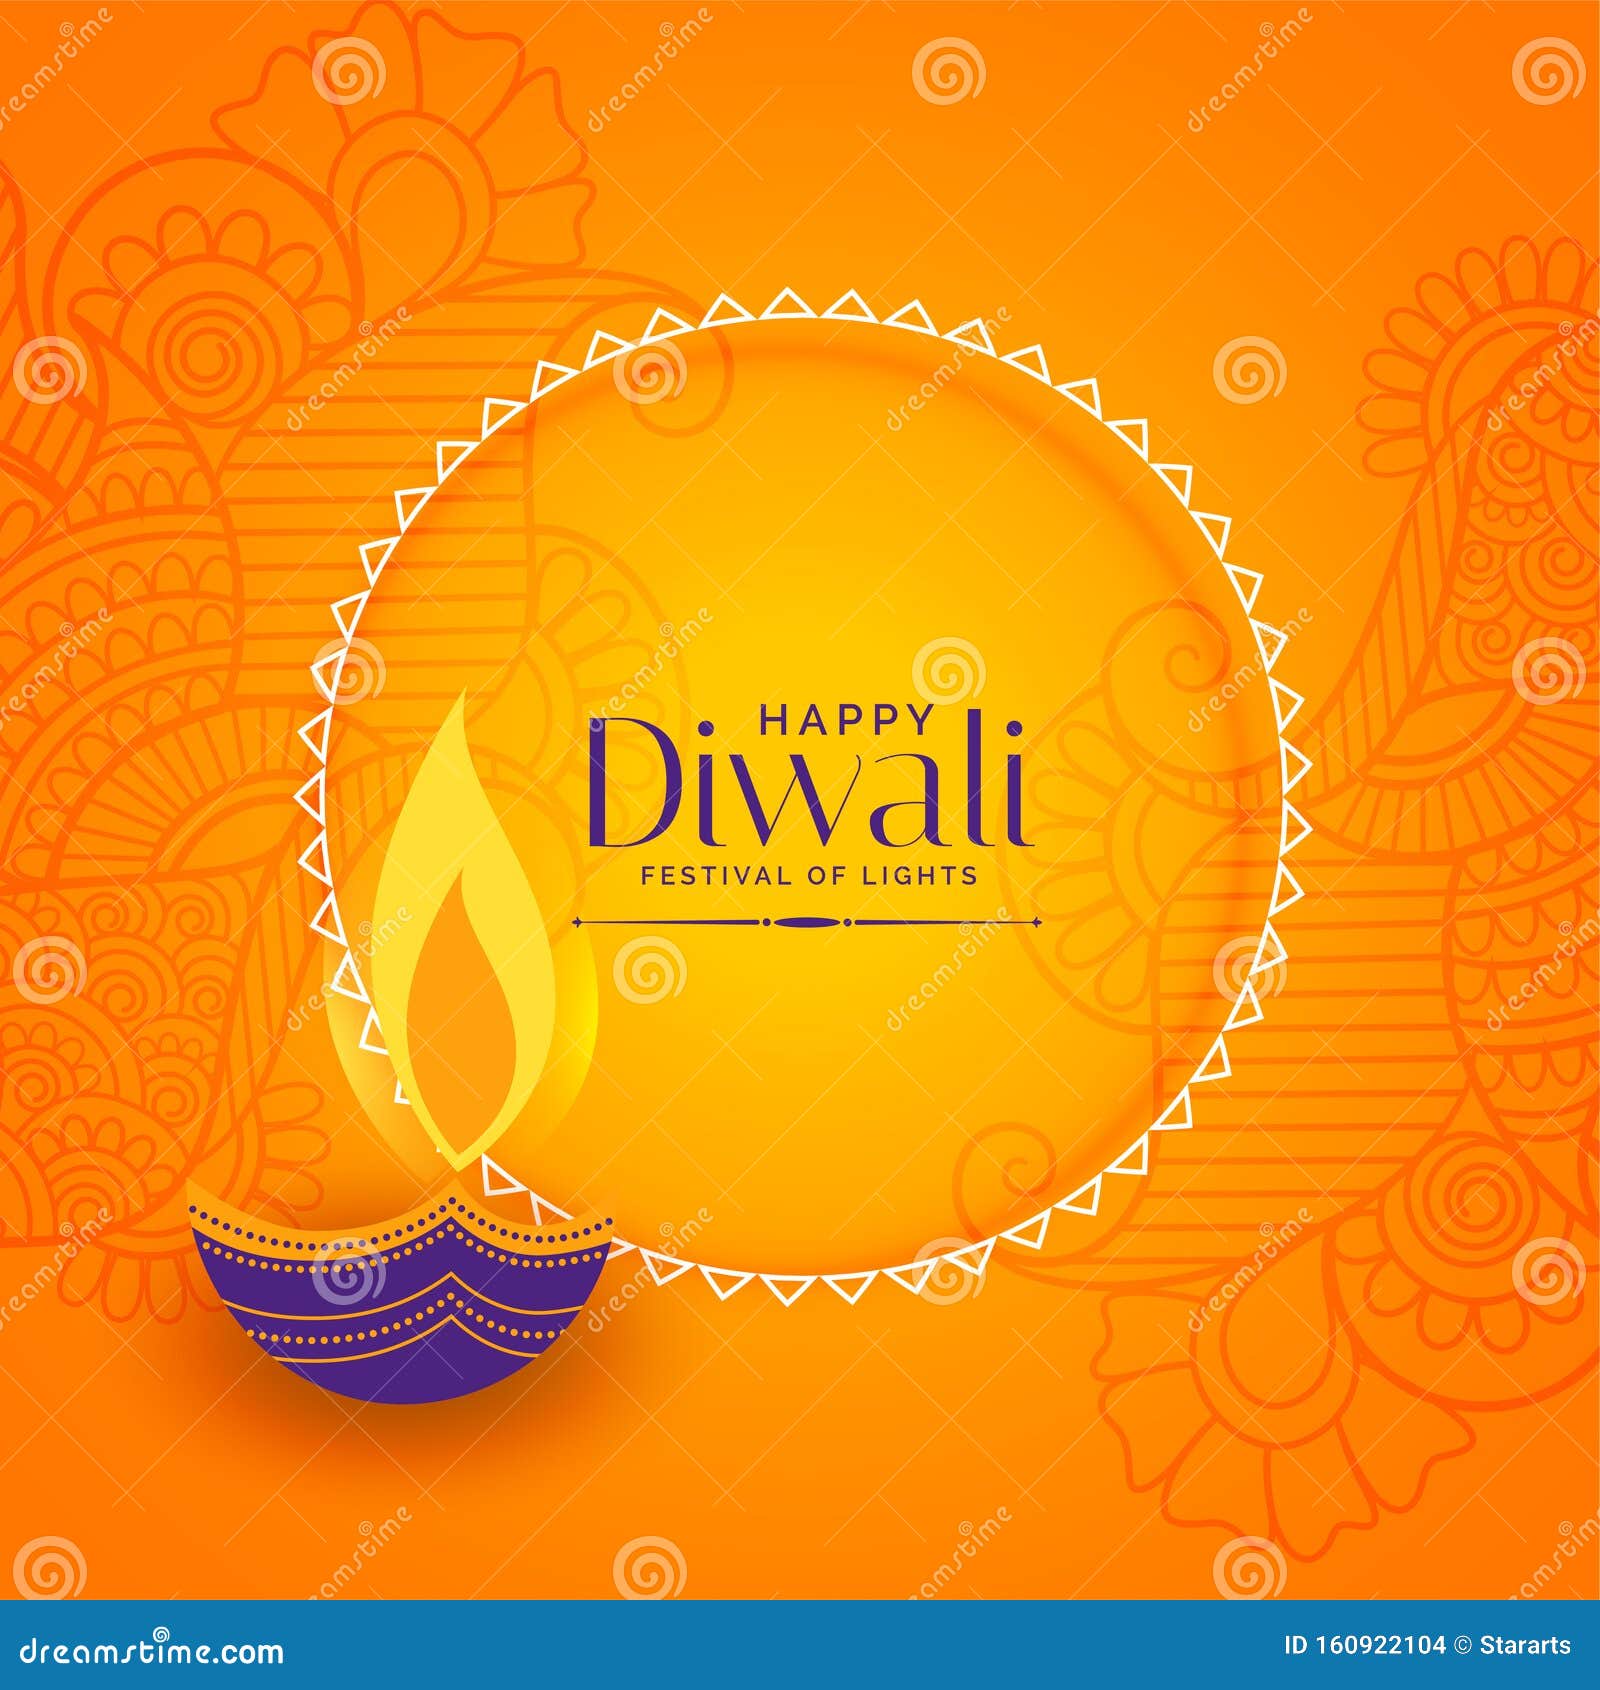 Happy Diwali Beautiful Yellow Decorative Background Design Stock Vector -  Illustration of banner, card: 160922104